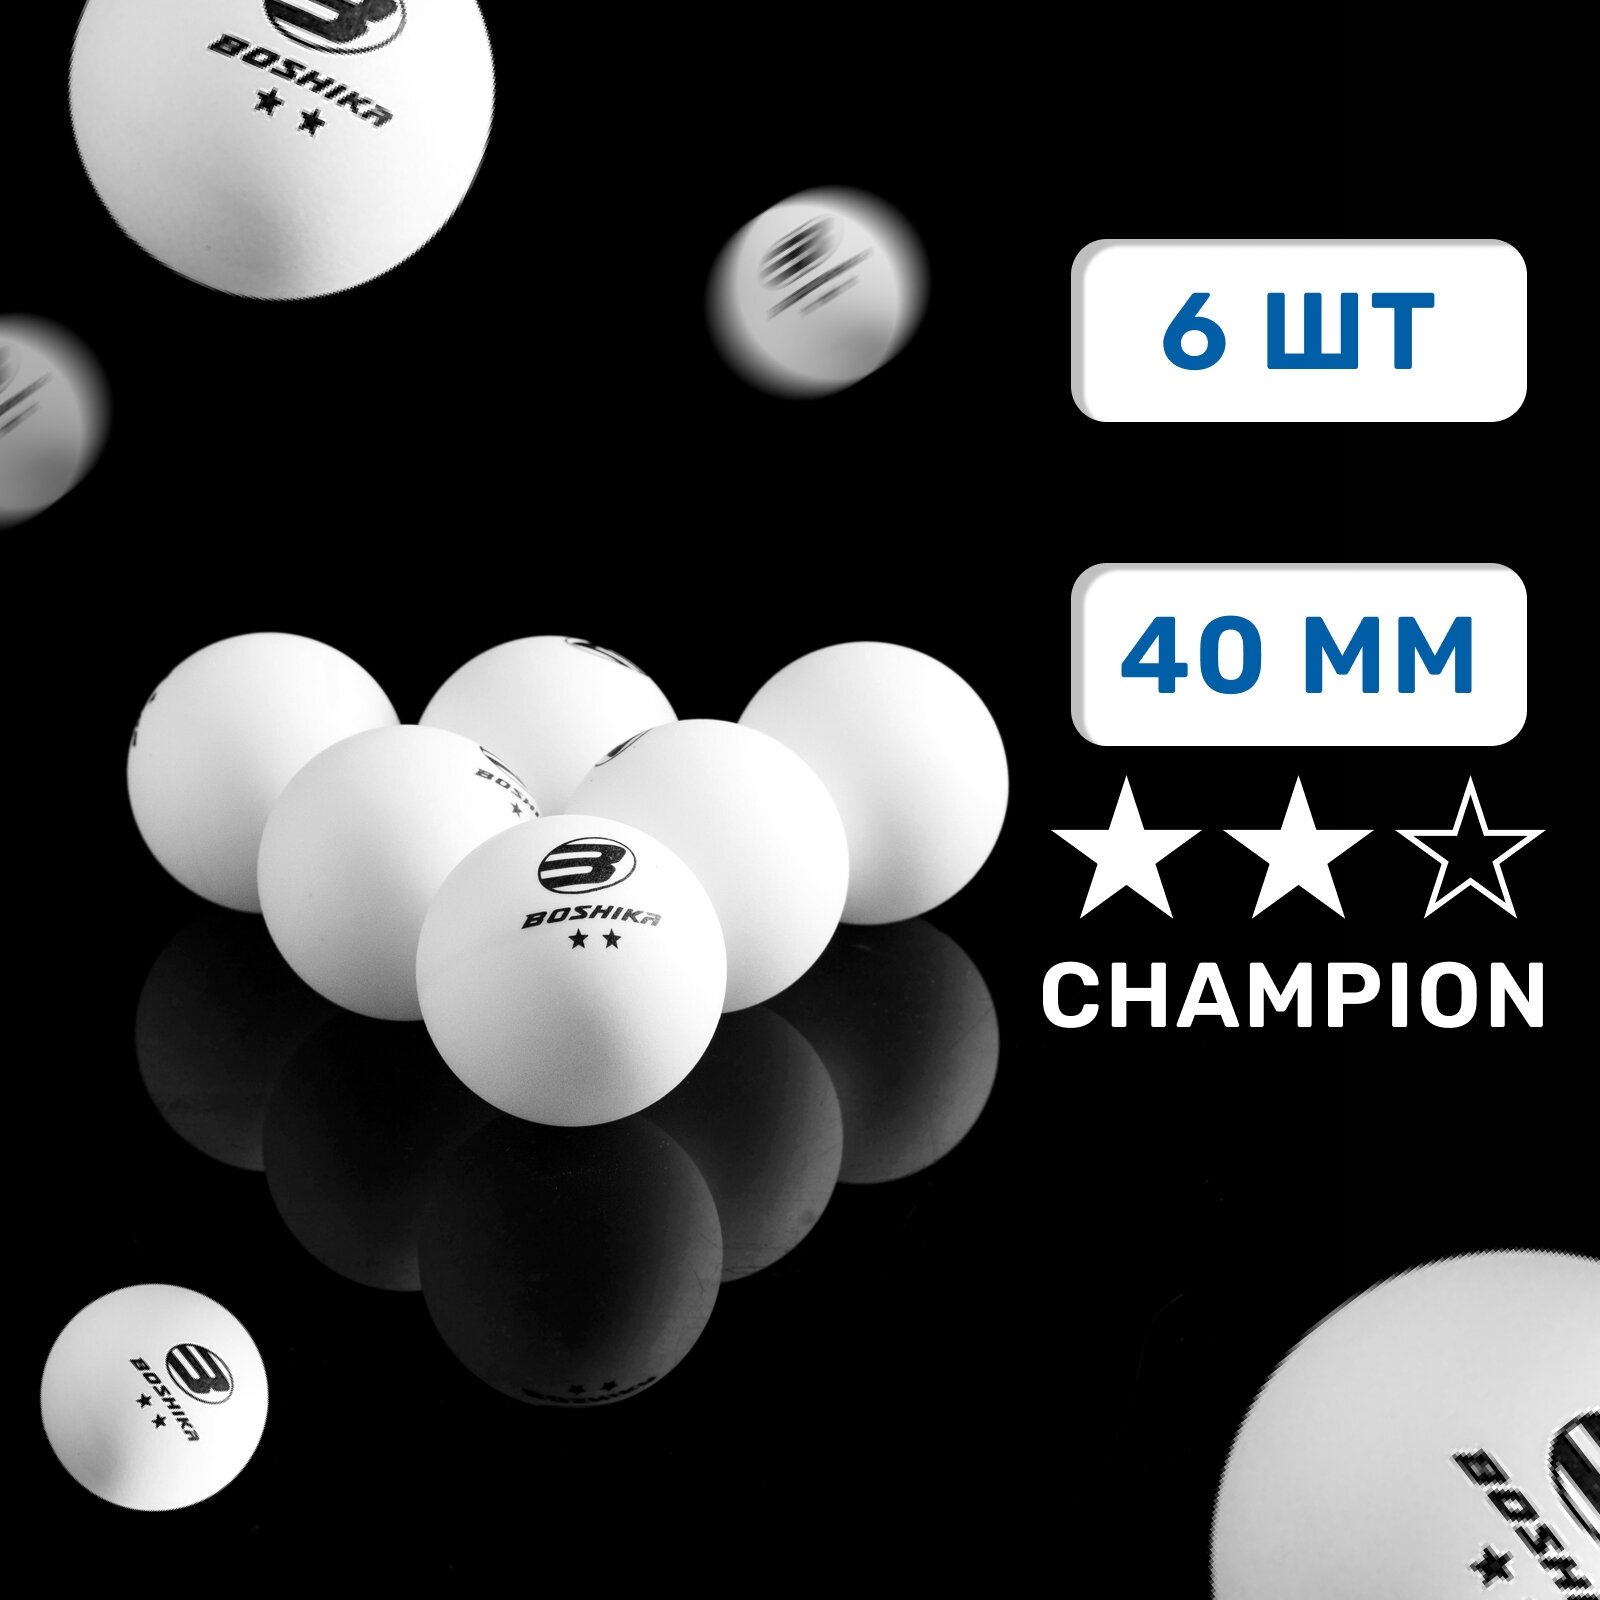 Мяч BOSHIKA "Championship", для настольного тенниса, 2 звезды, набор 6 штук, диаметр 40 мм, цвет белый